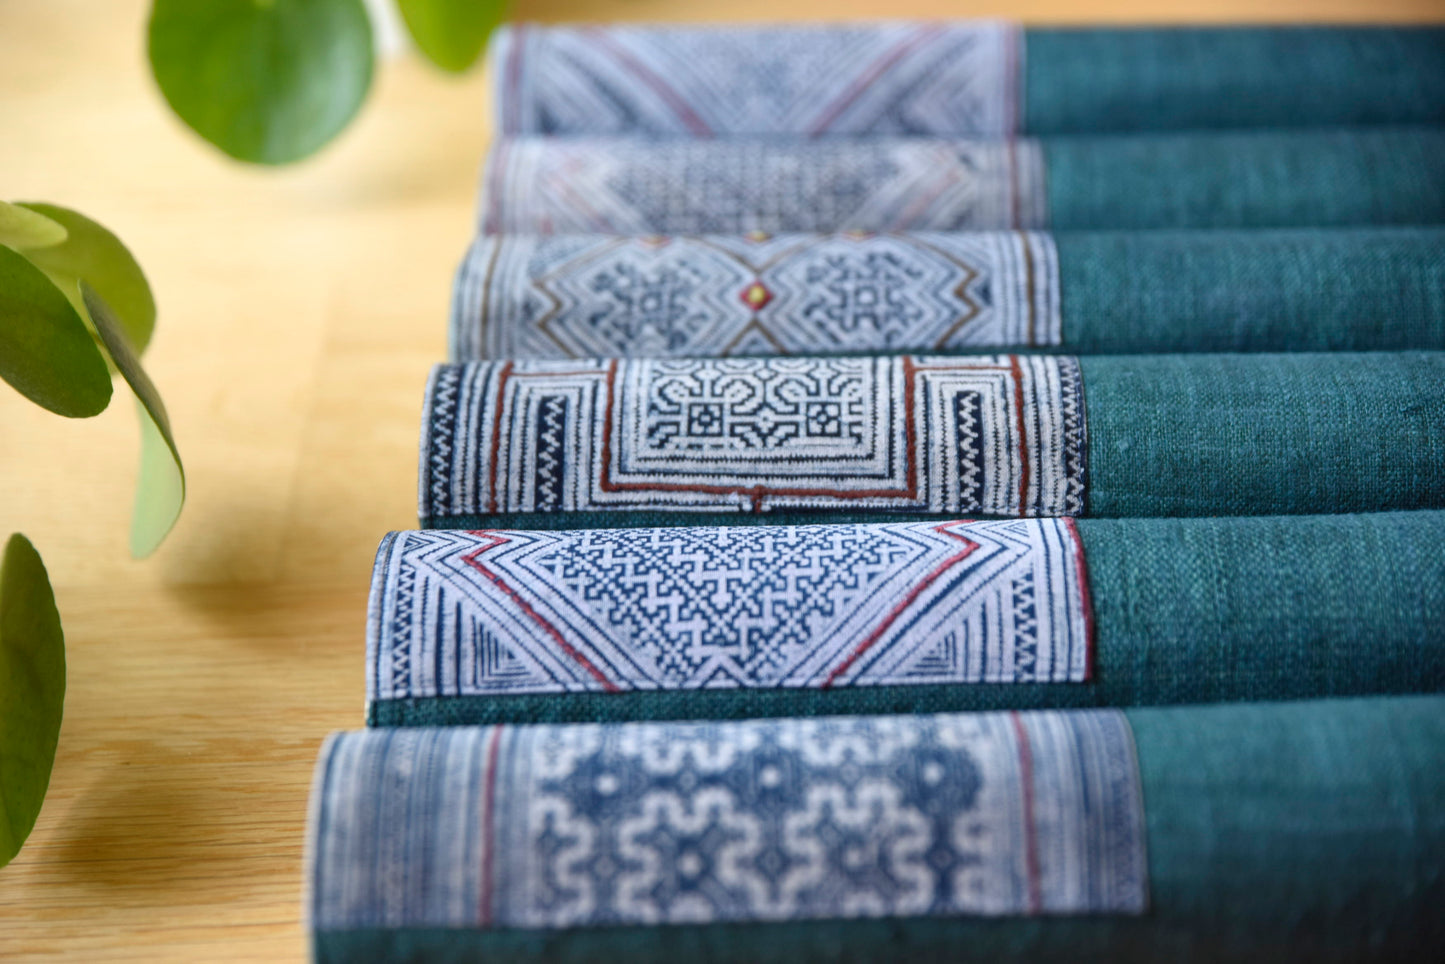 Green hemp placemat, vintage batik indigo patch, hand-woven hemp fabrics